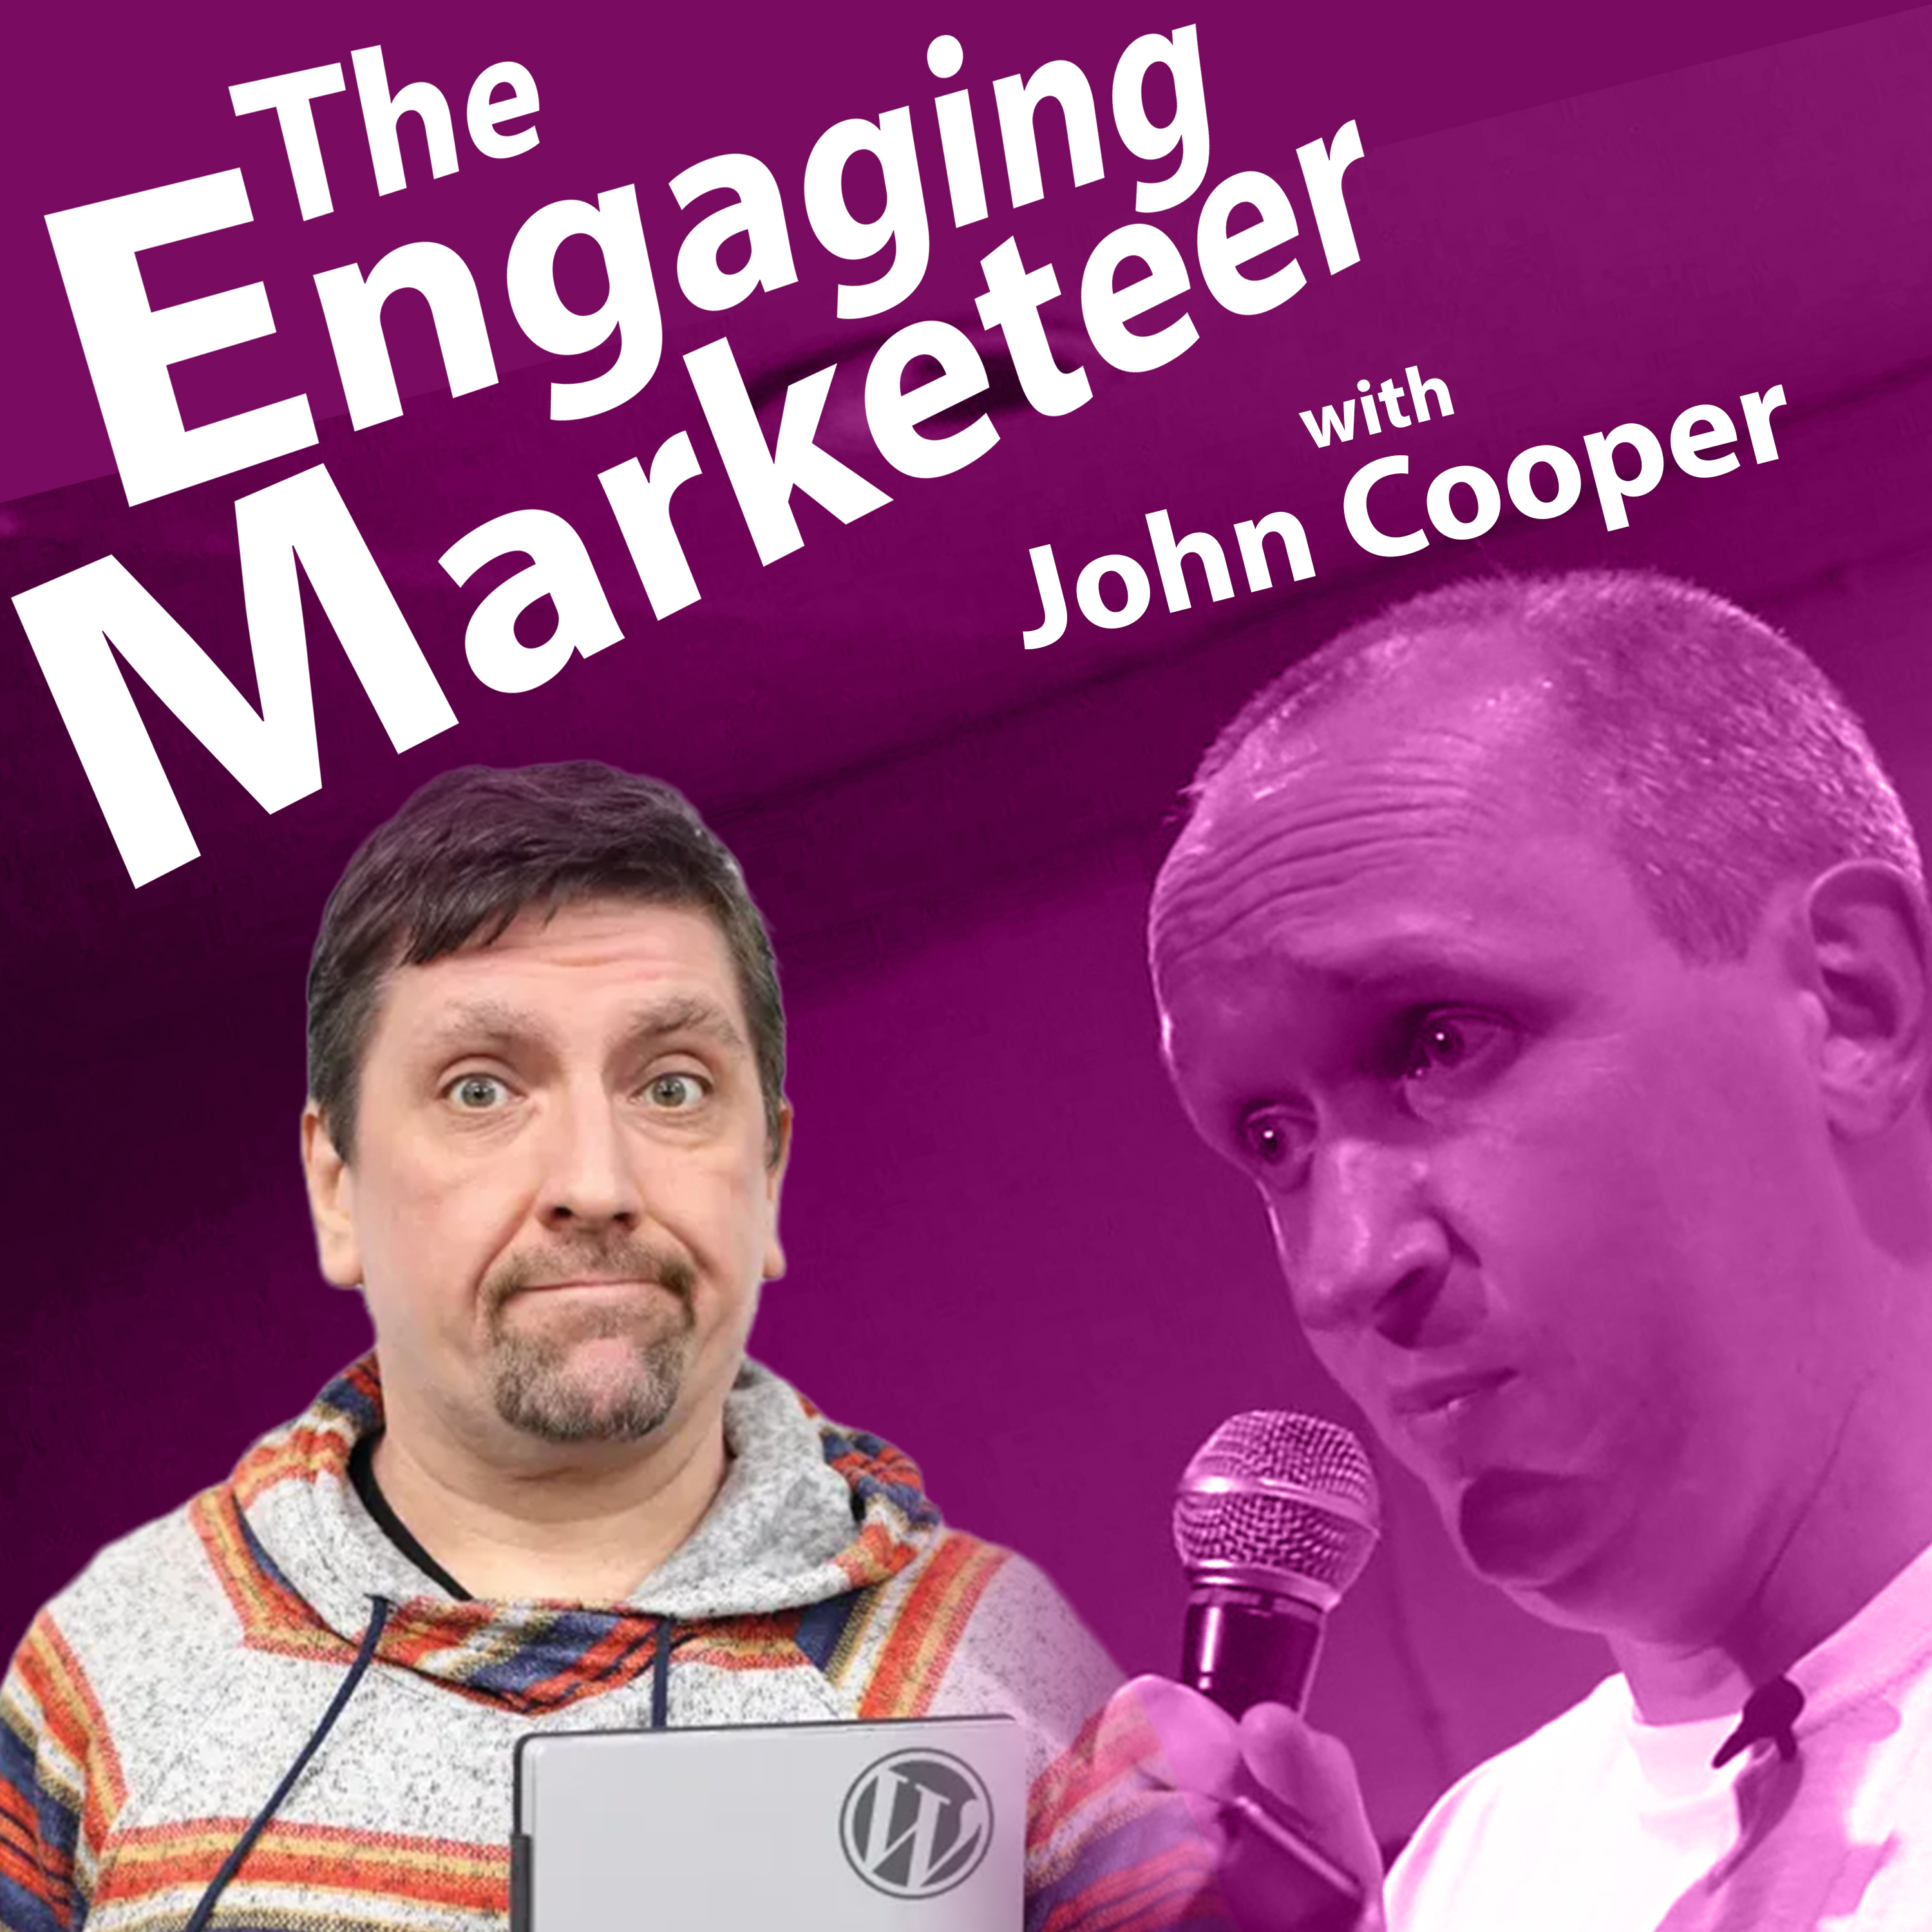 John Cooper: TEDx Speaker & Comedian Discusses Comedy & Business